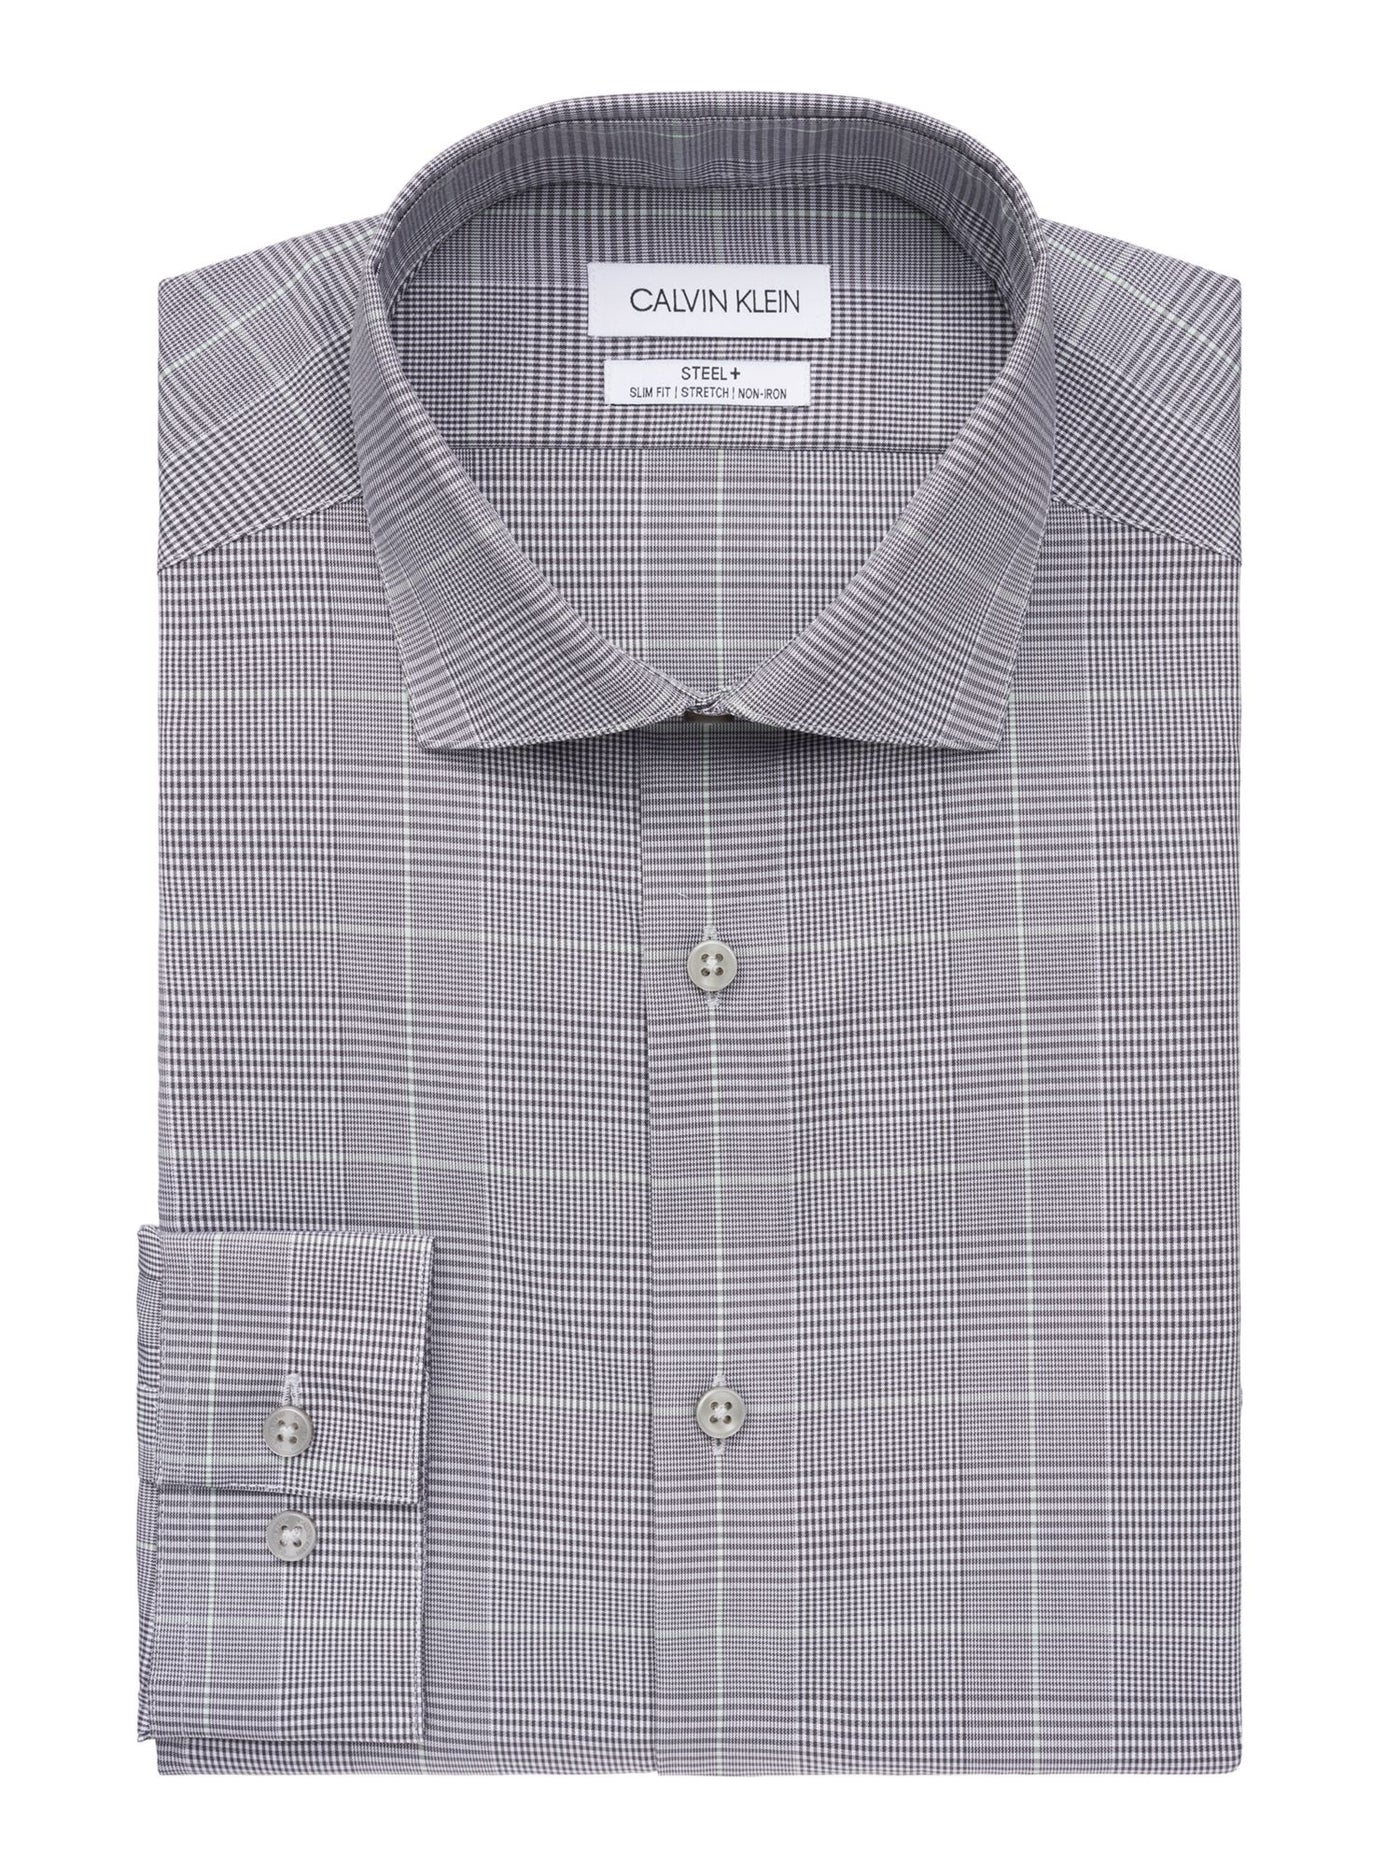 CALVIN KLEIN Mens Steel Gray Easy Care, Plaid Spread Collar Slim Fit Moisture Wicking Dress Shirt XL 17.5- 34/35